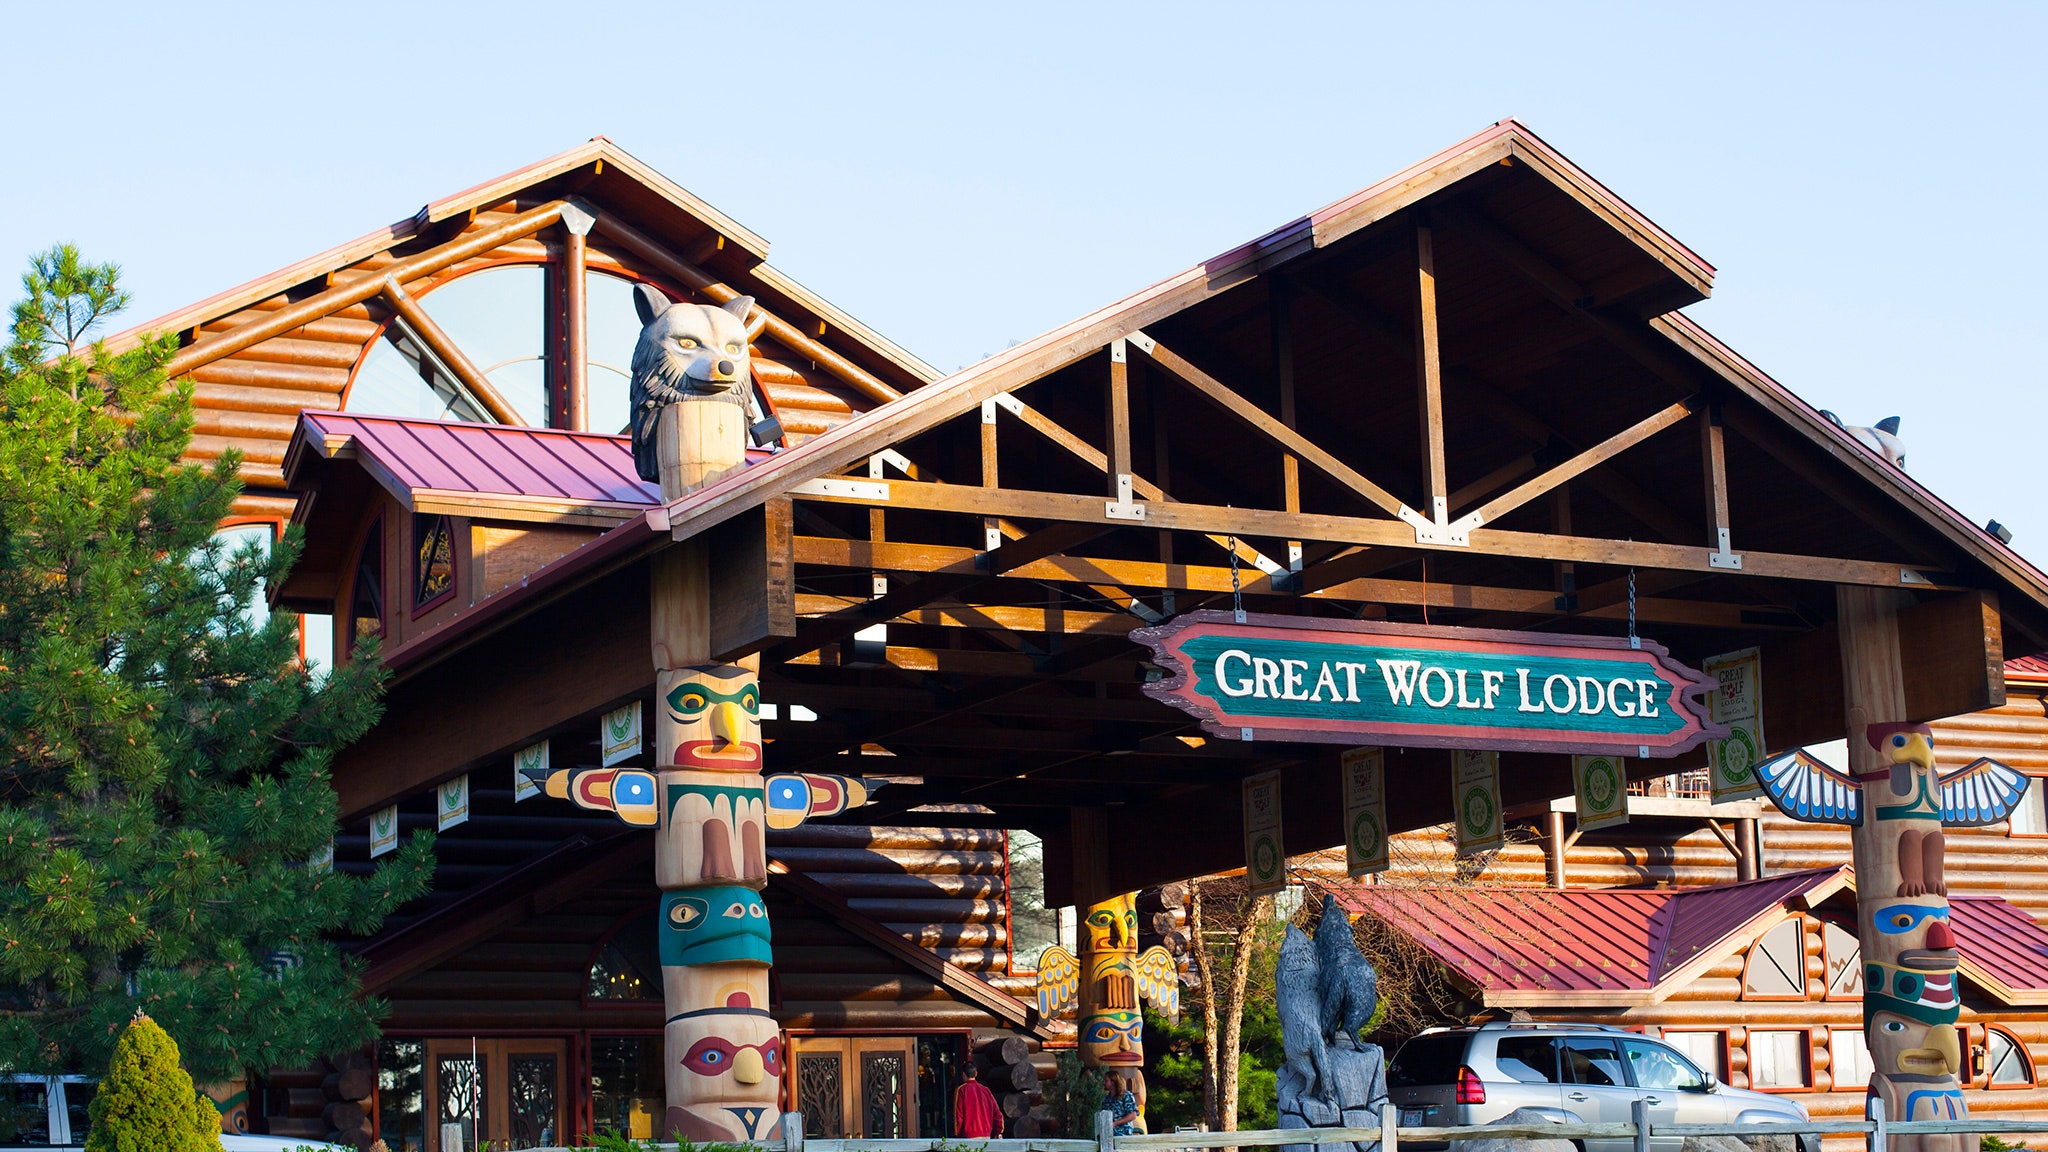 Great Wolf Lodge Wisconsin Dells Cond Nast Traveler